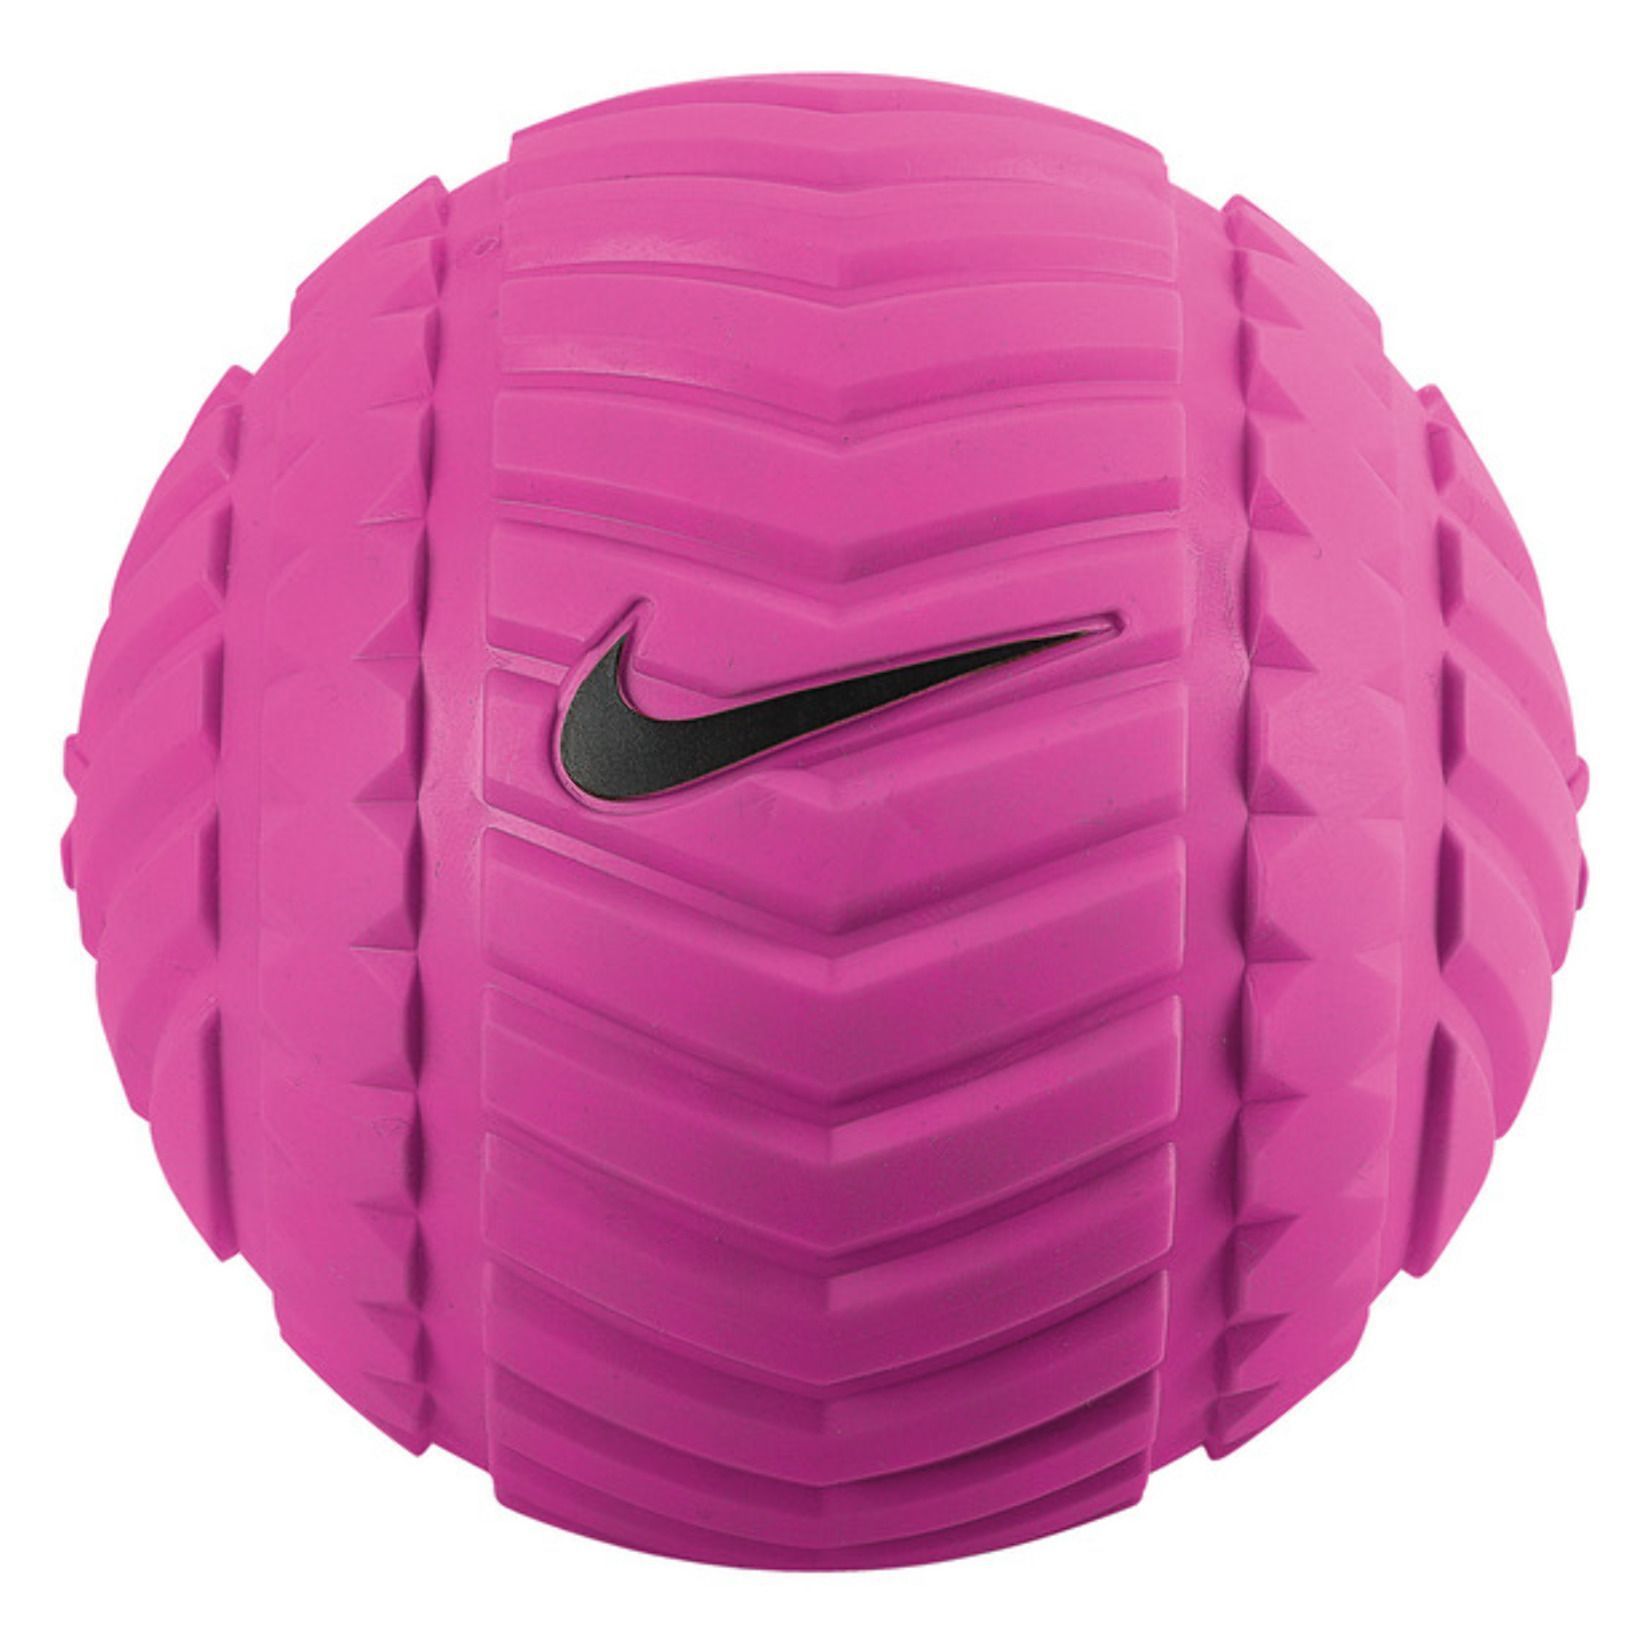 Sportax Nike Recovery Ball - Kitlocker.com